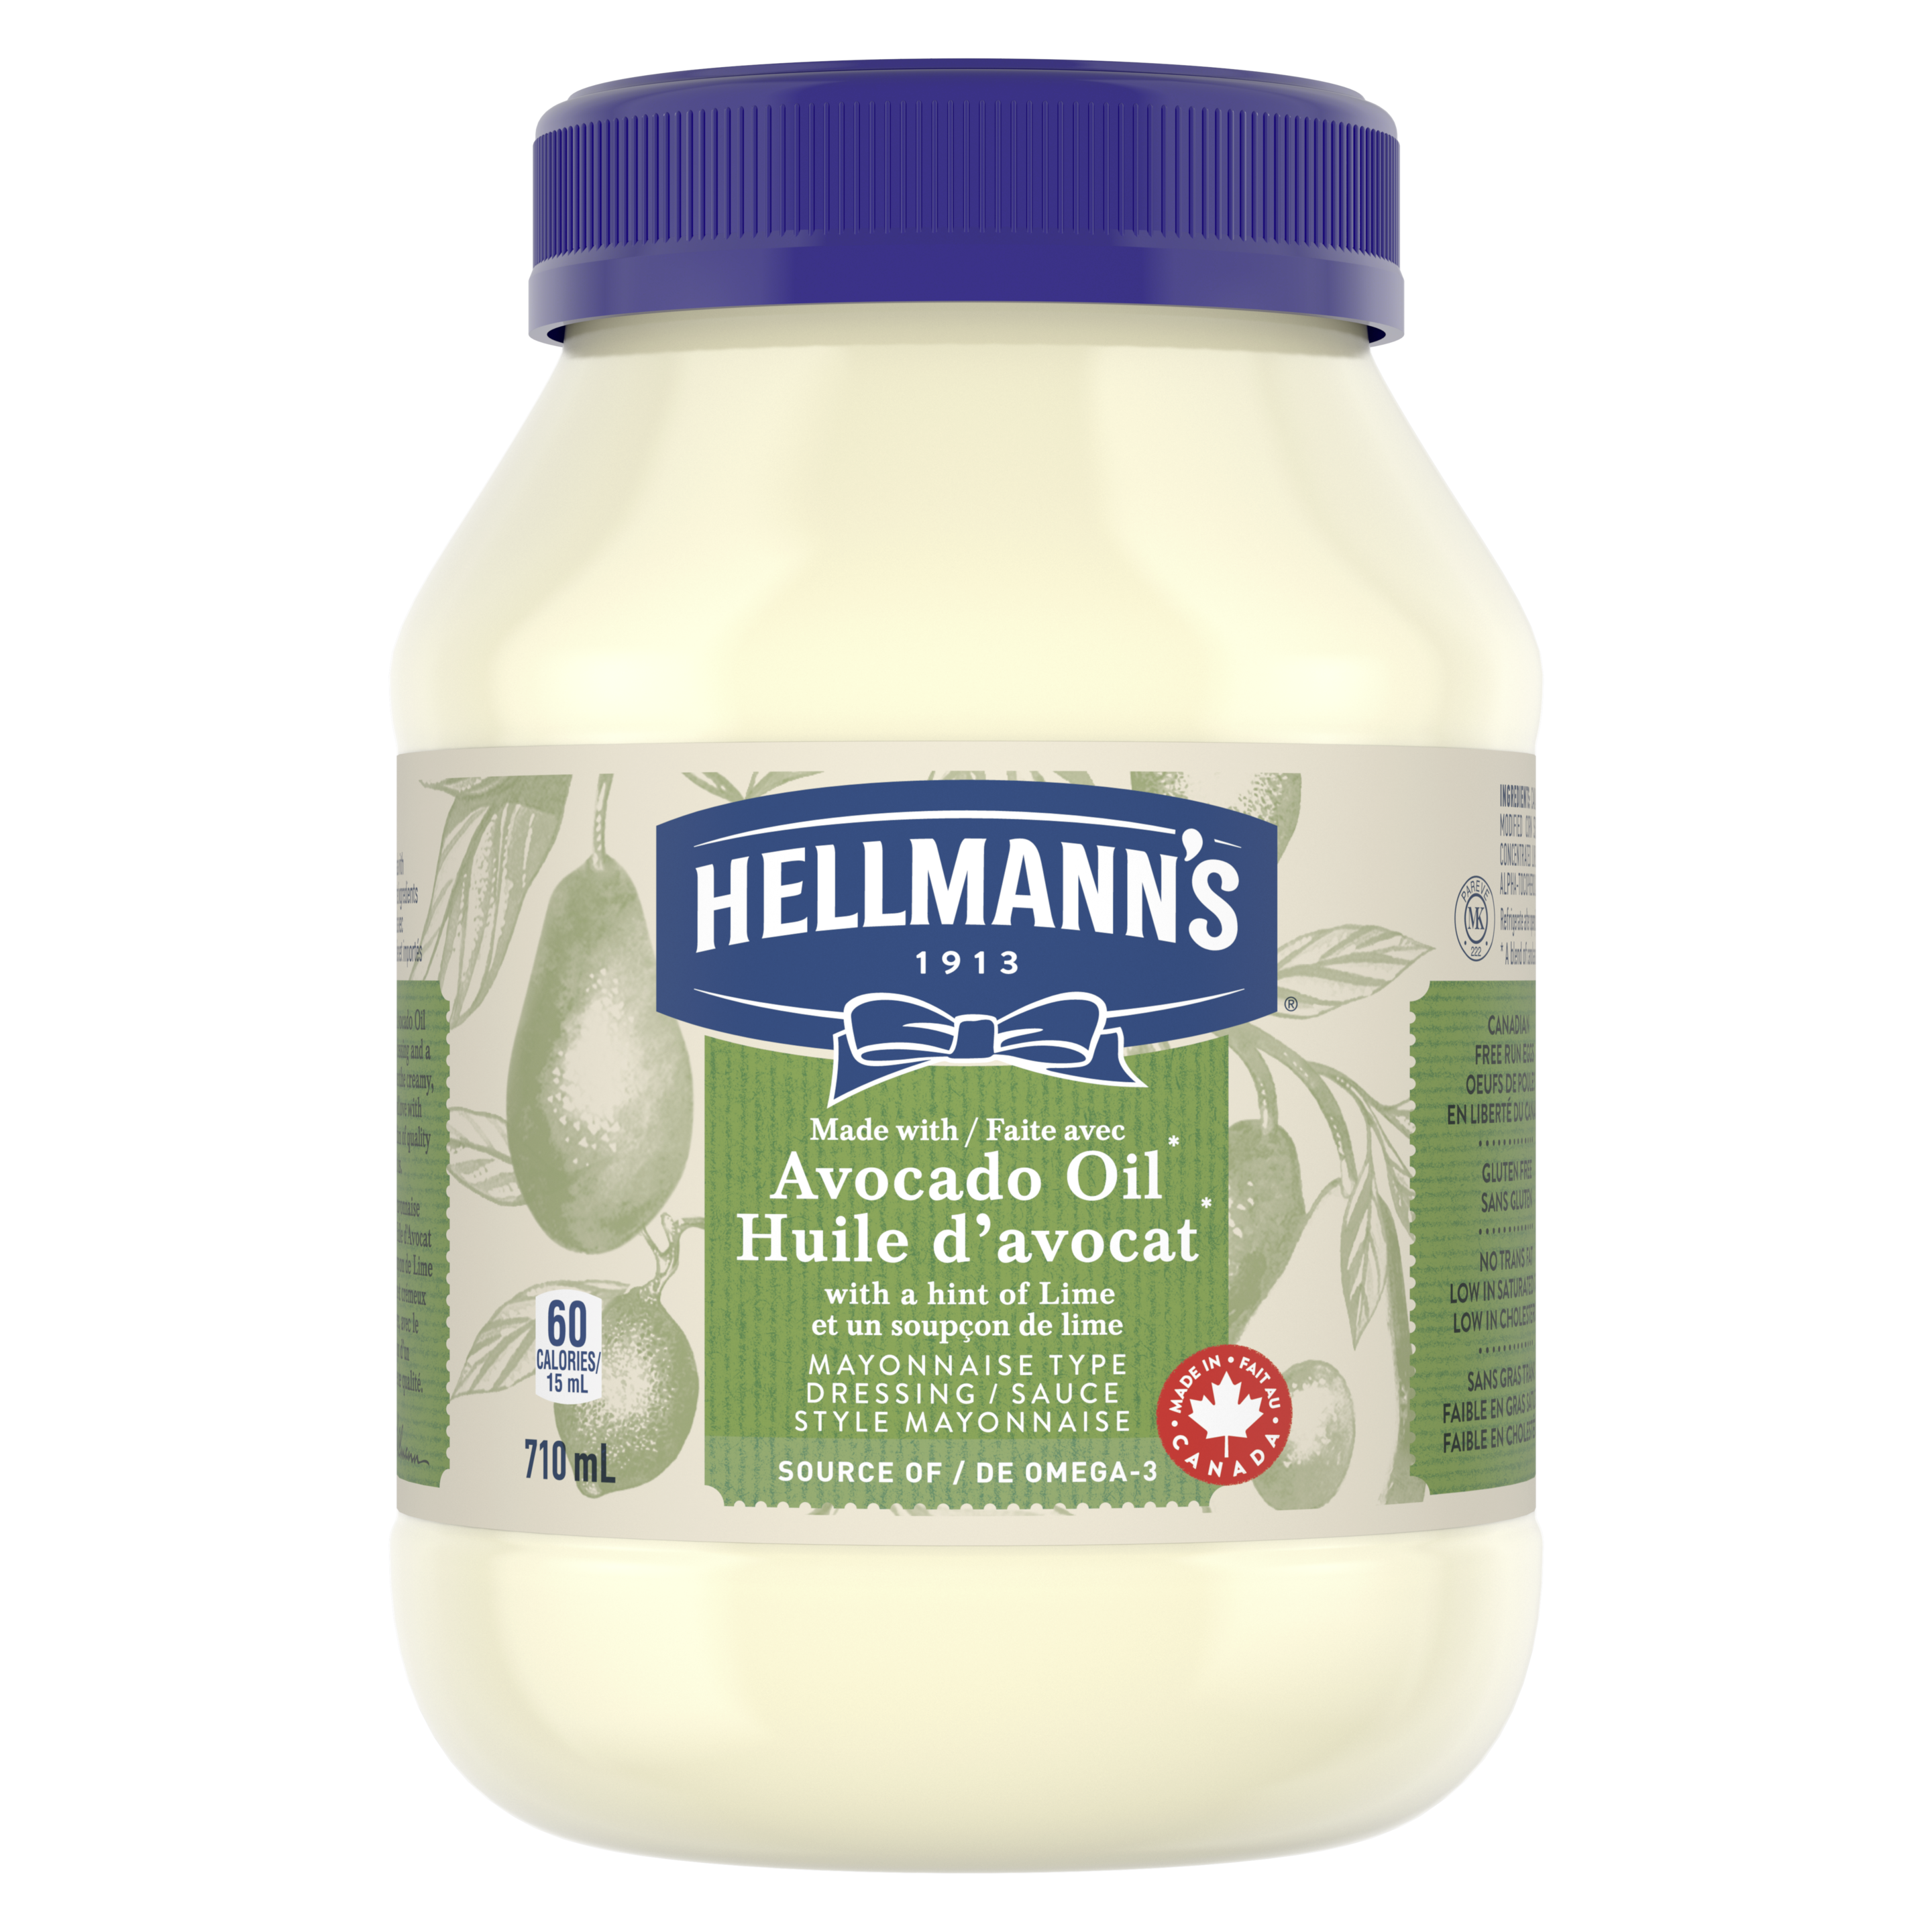 Hellmann’s® made with Avocado Oil